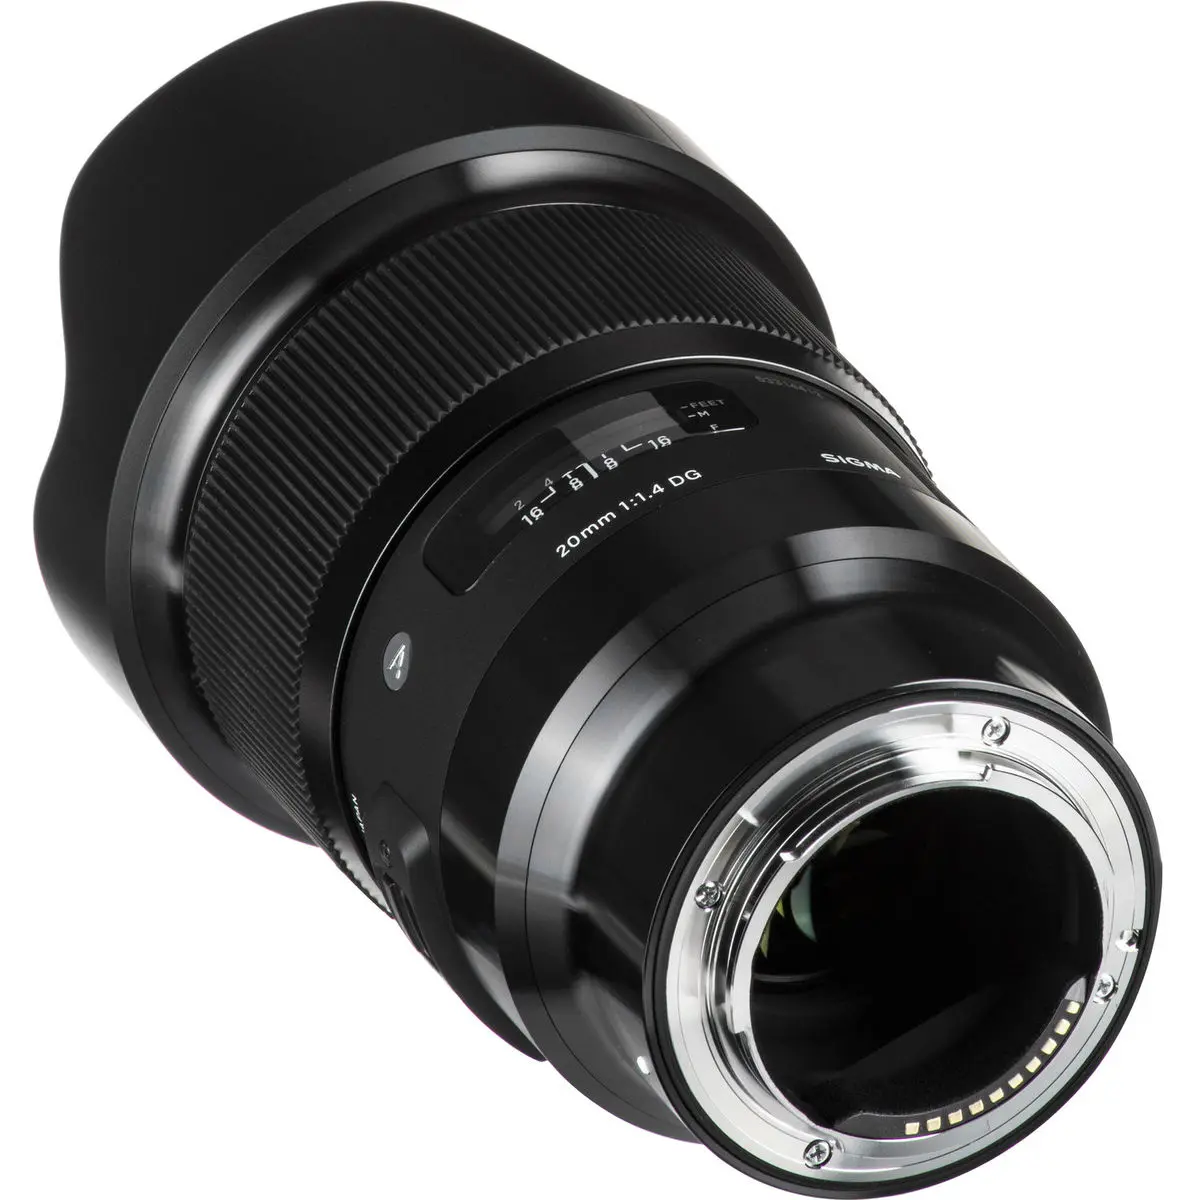 7. Sigma 20mm F1.4 DG HSM | A (Sony-E) Lens